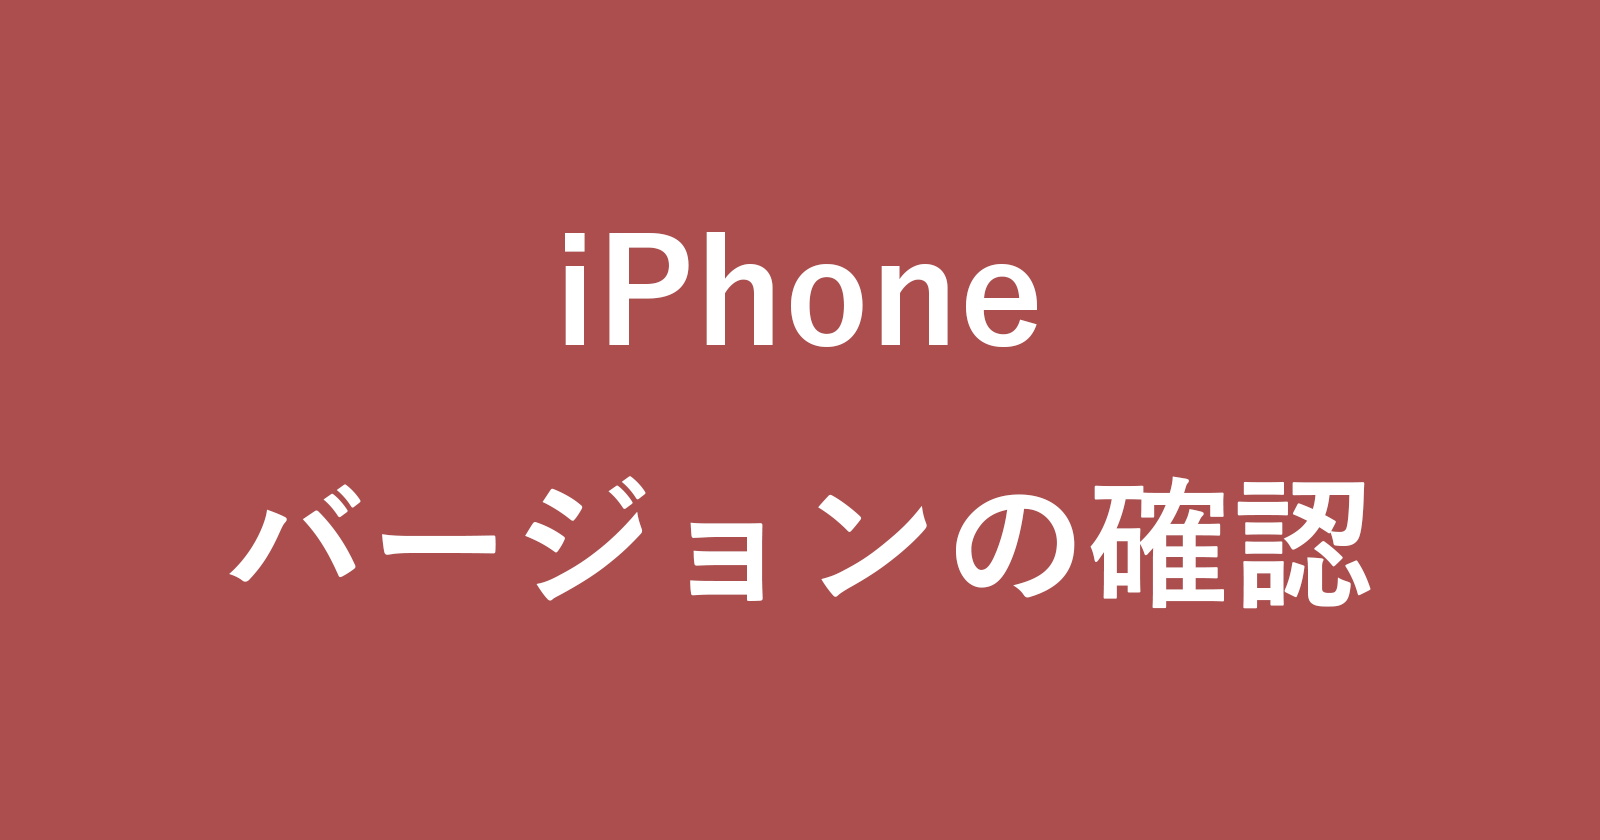 iphone ipad ios version